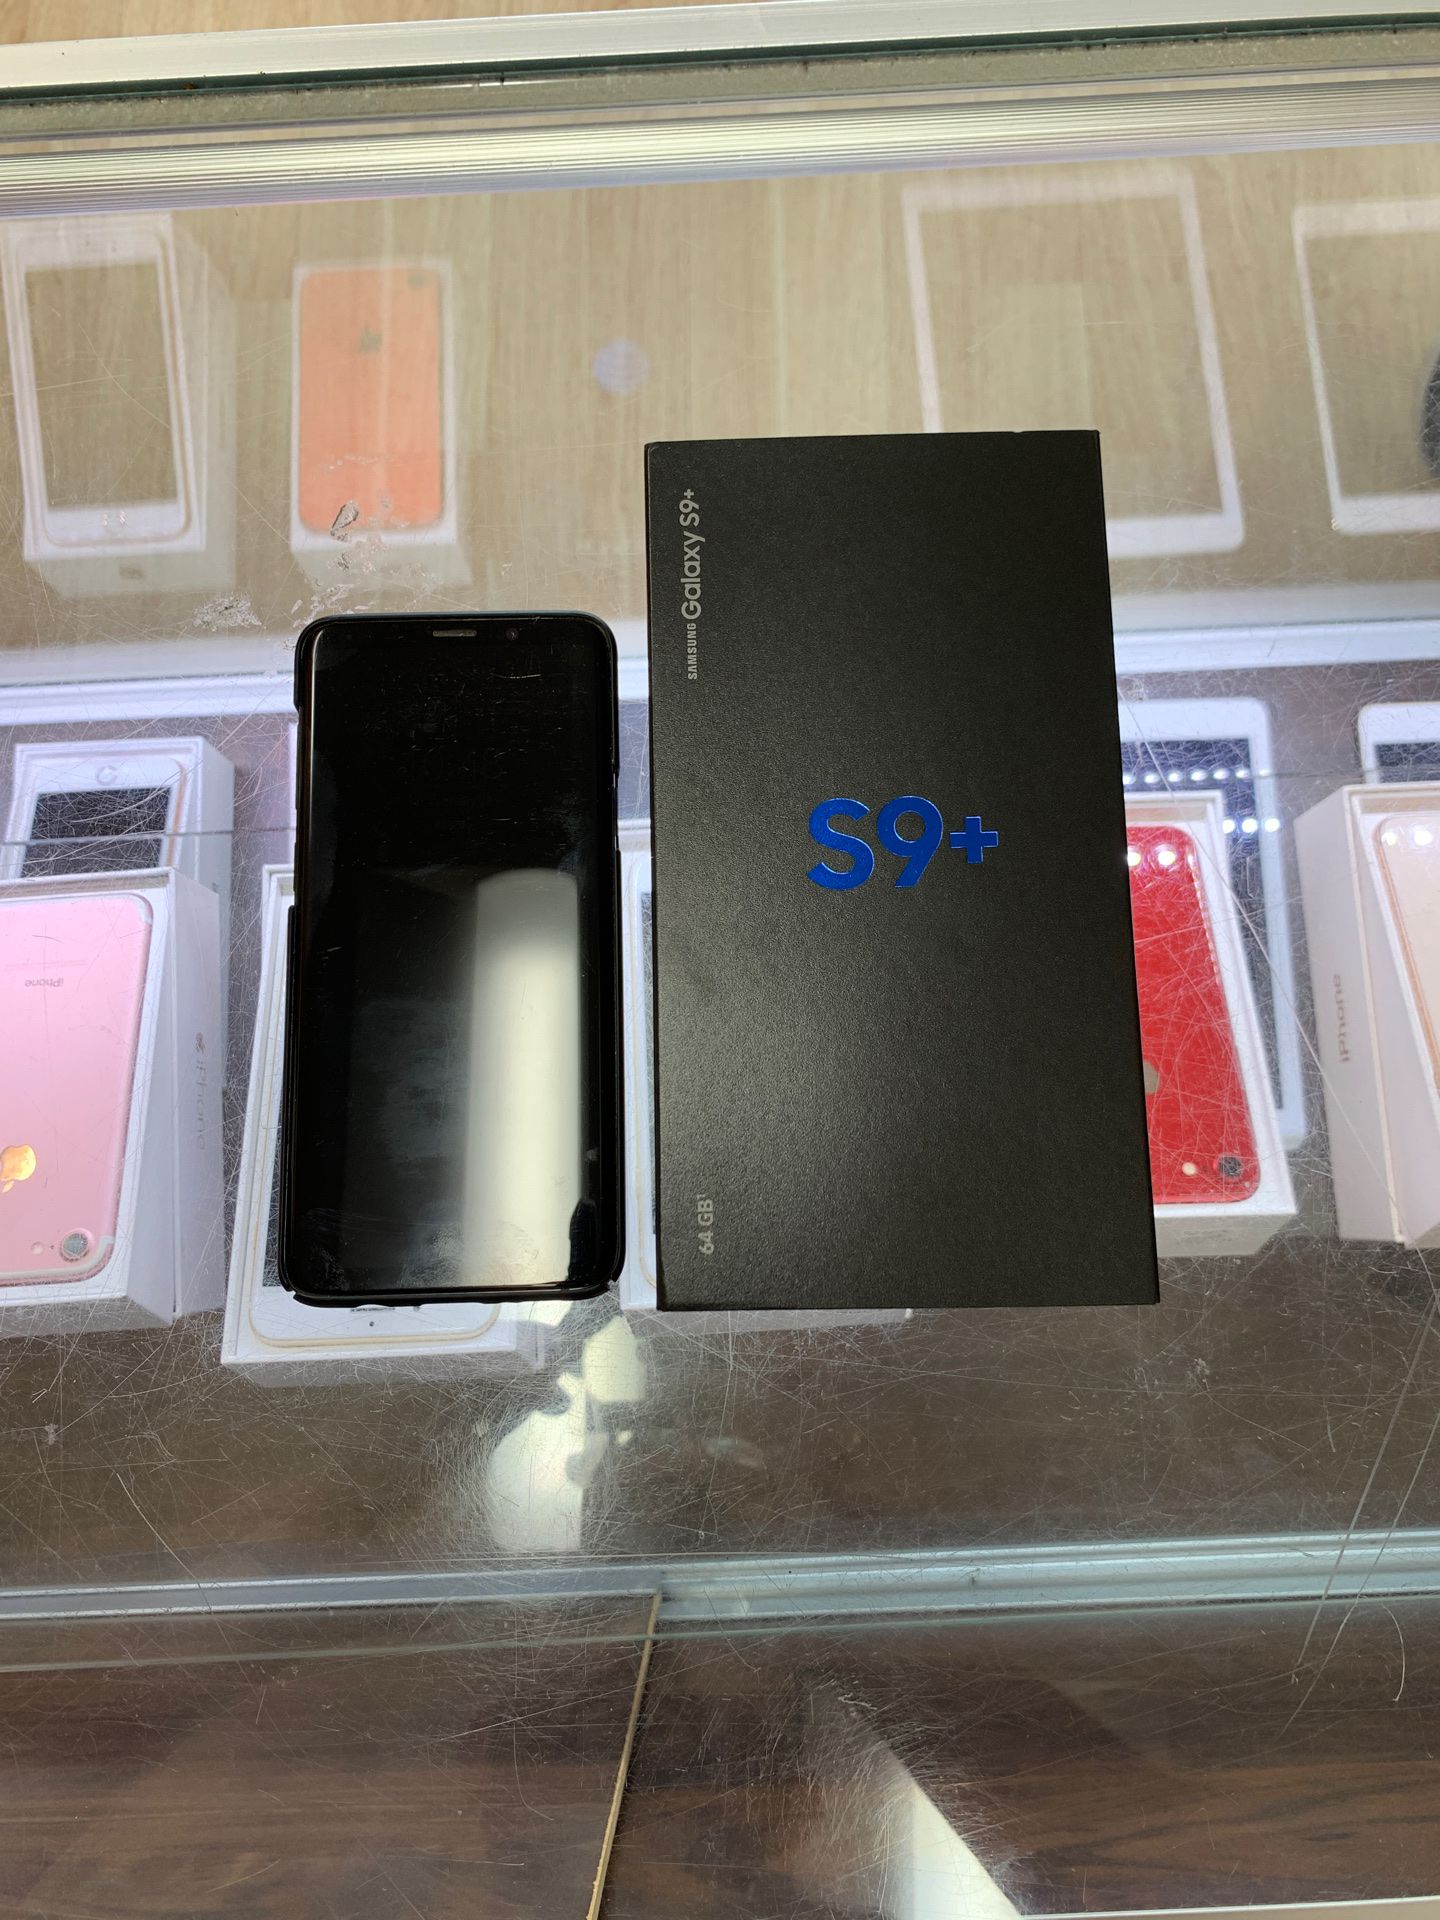 Unlocked Samsung s9 + black 8/10 condition